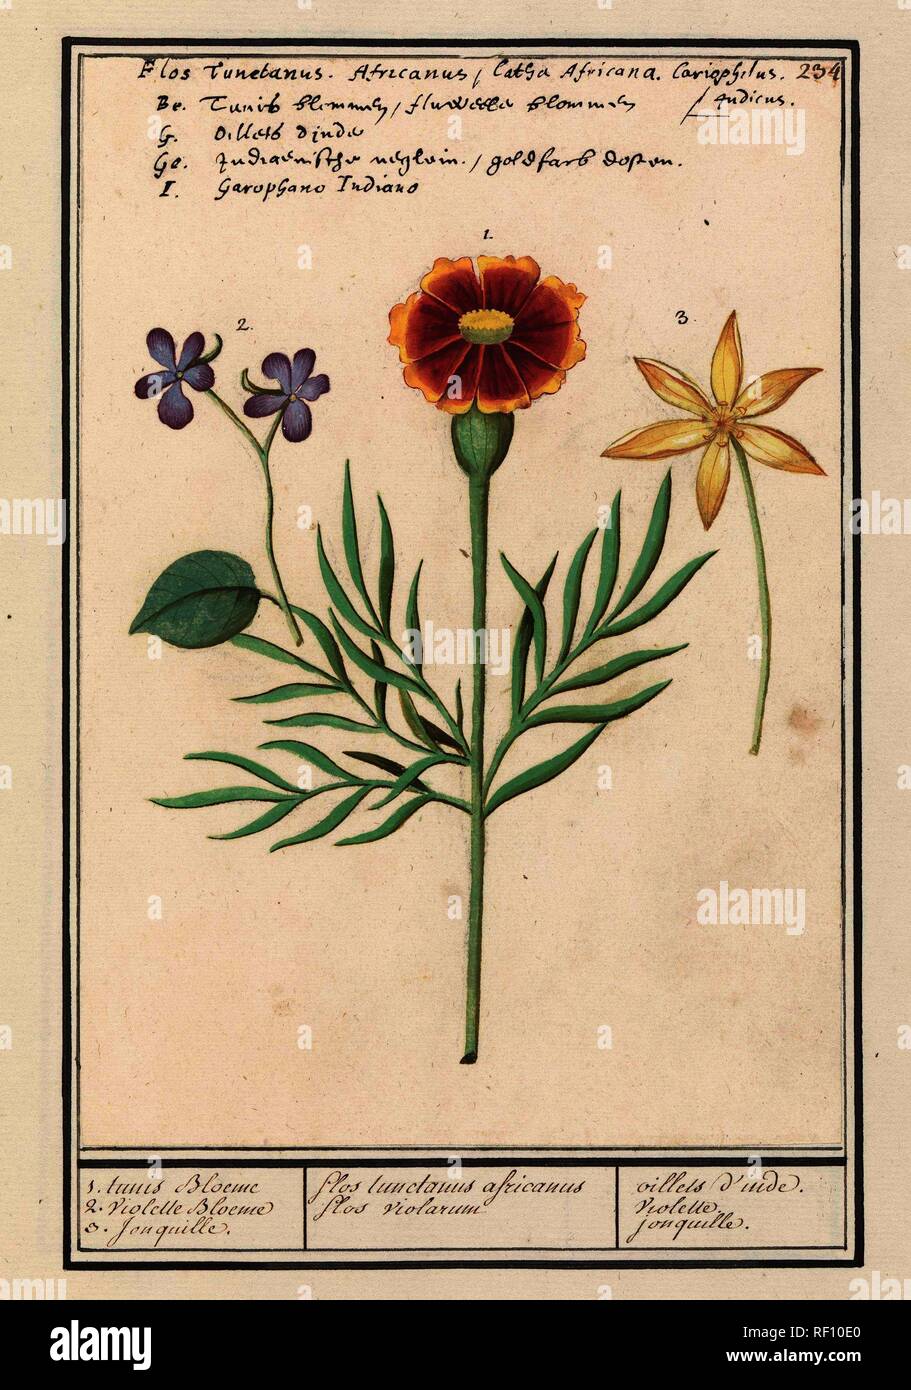 Afrikaantje (Tagetes), viooltje (viola) en narcis (Narcissus). 1. tunis Bloeme 2. Violette Bloeme 3. Jonquille. / flos tunctanus africanus flos violarum / oillets d'inde. violette. jonquille (title on object). Draughtsman: Anselmus Boëtius de Boodt. Draughtsman: Elias Verhulst. Dating: 1596 - 1610. Place: Praag. Measurements: h 244 mm × w 172 mm. Museum: Rijksmuseum, Amsterdam. Stock Photo